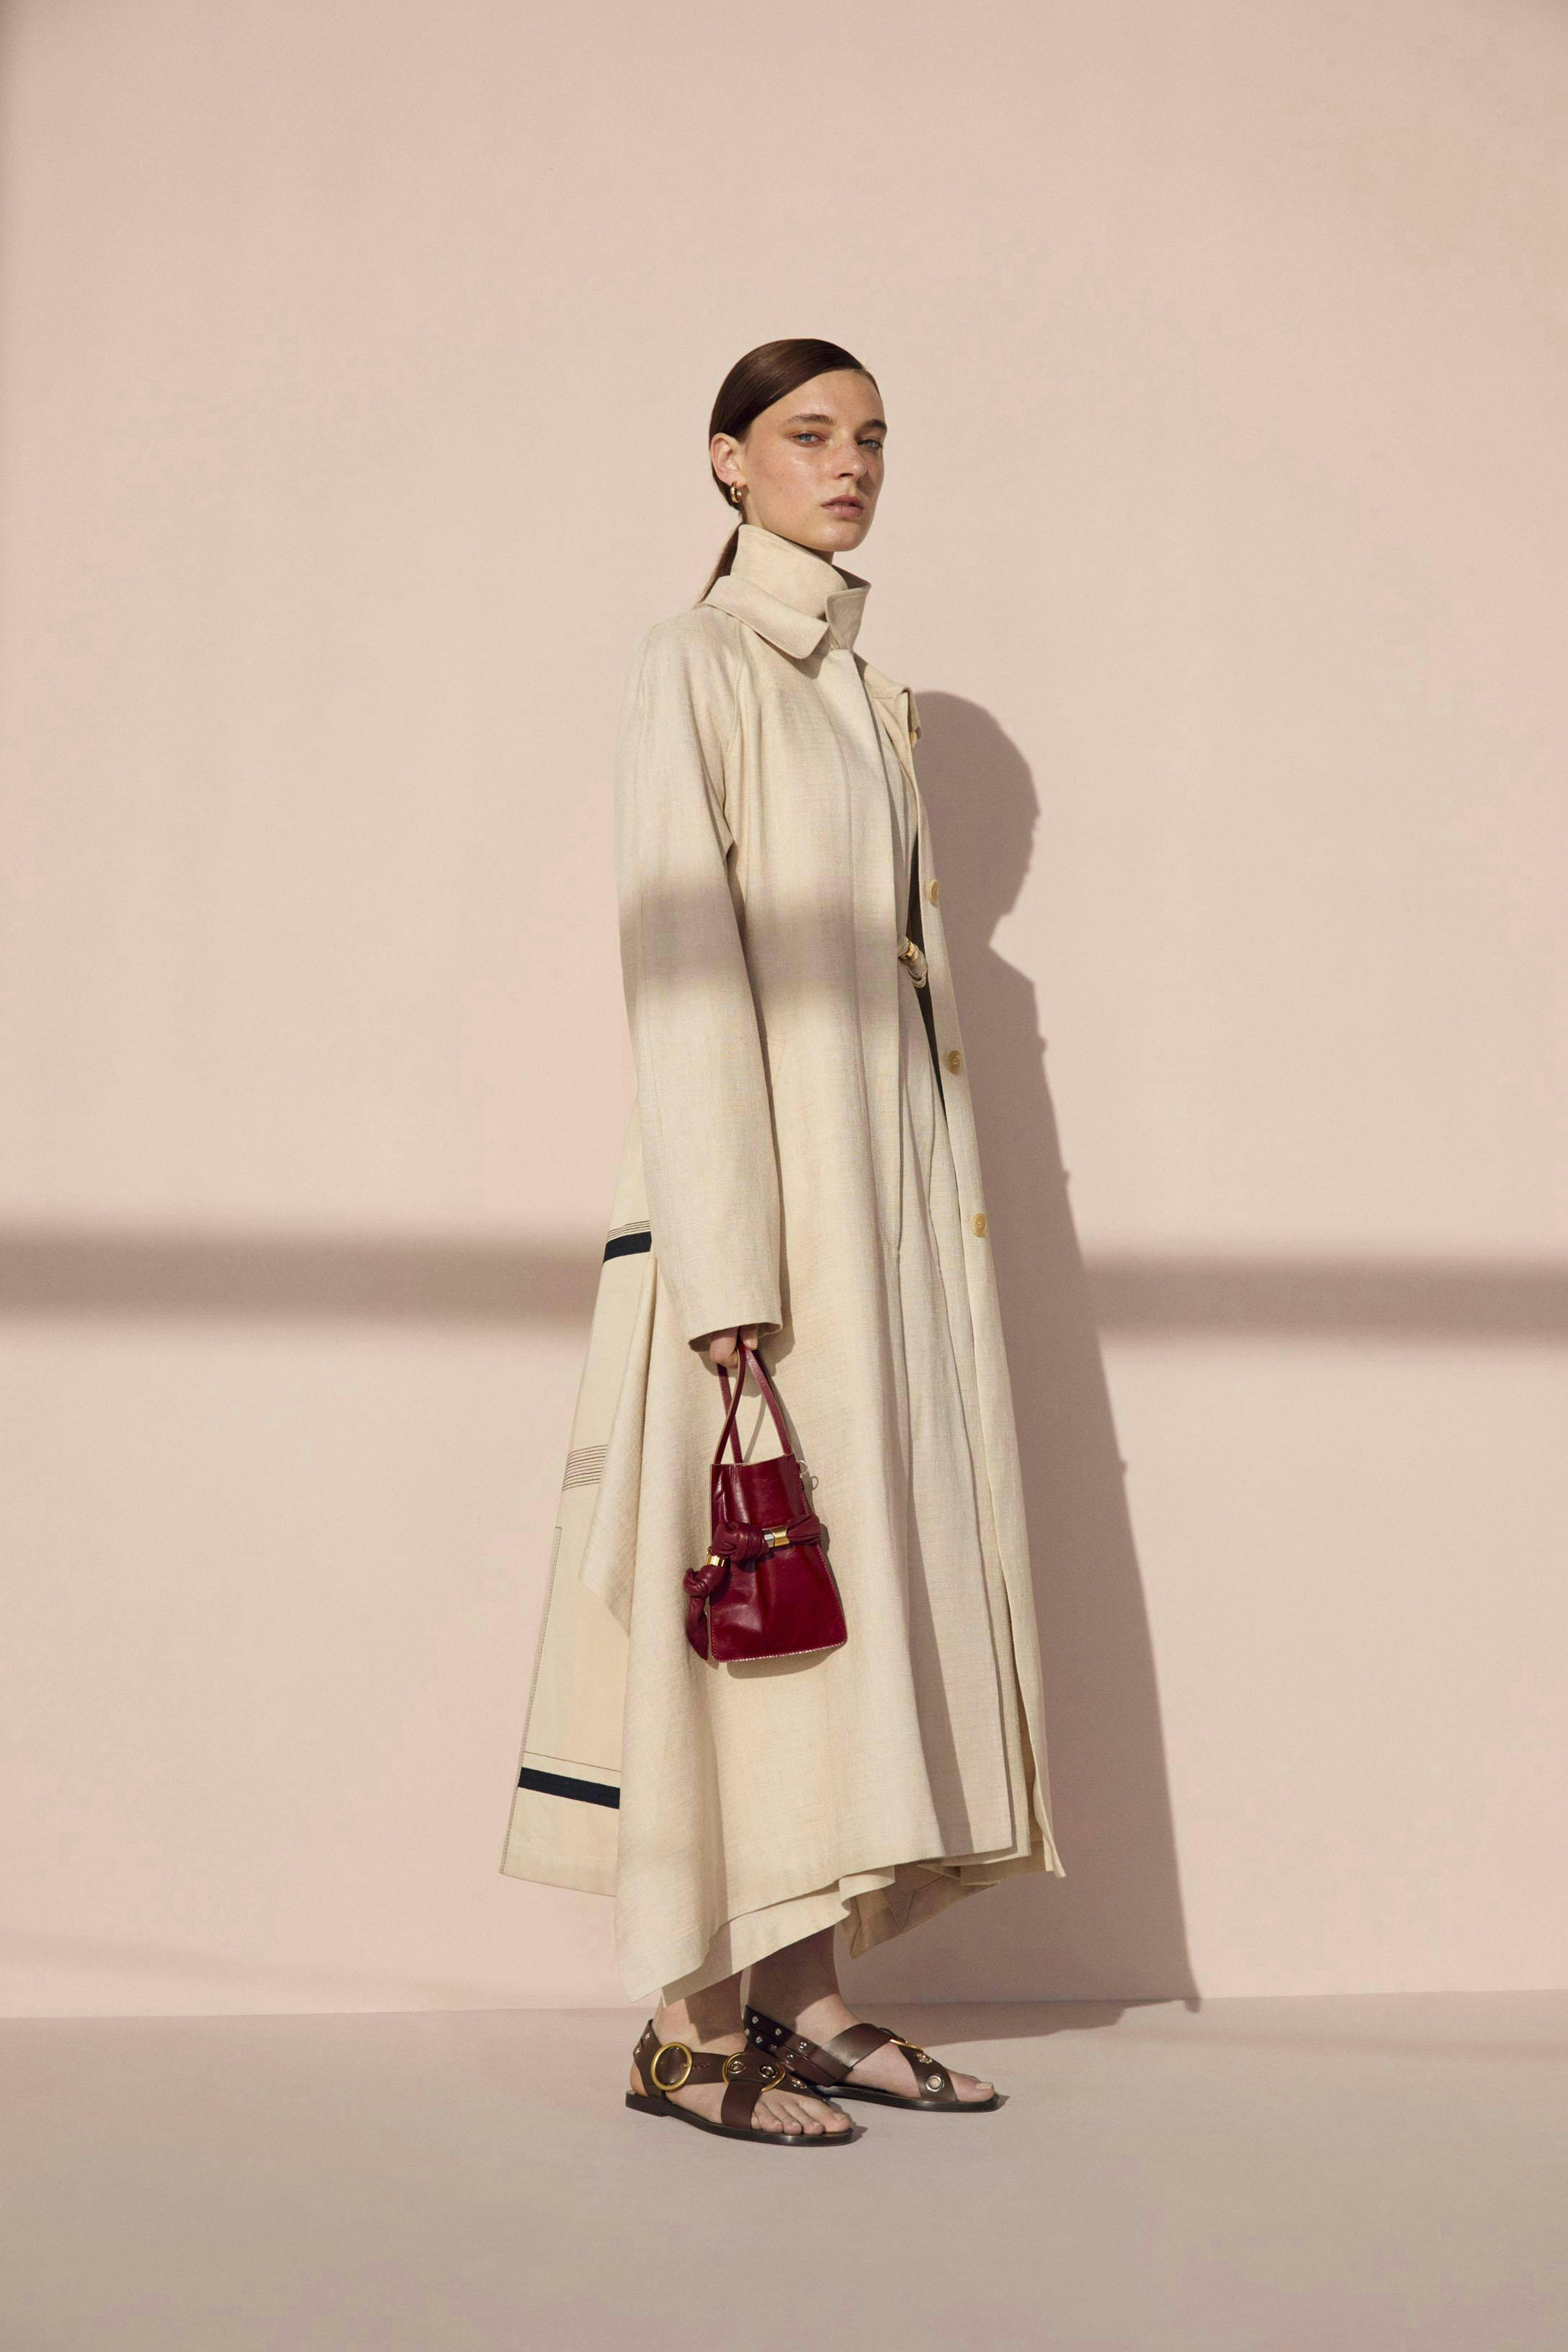 clothing apparel overcoat coat sleeve handbag bag accessories accessory